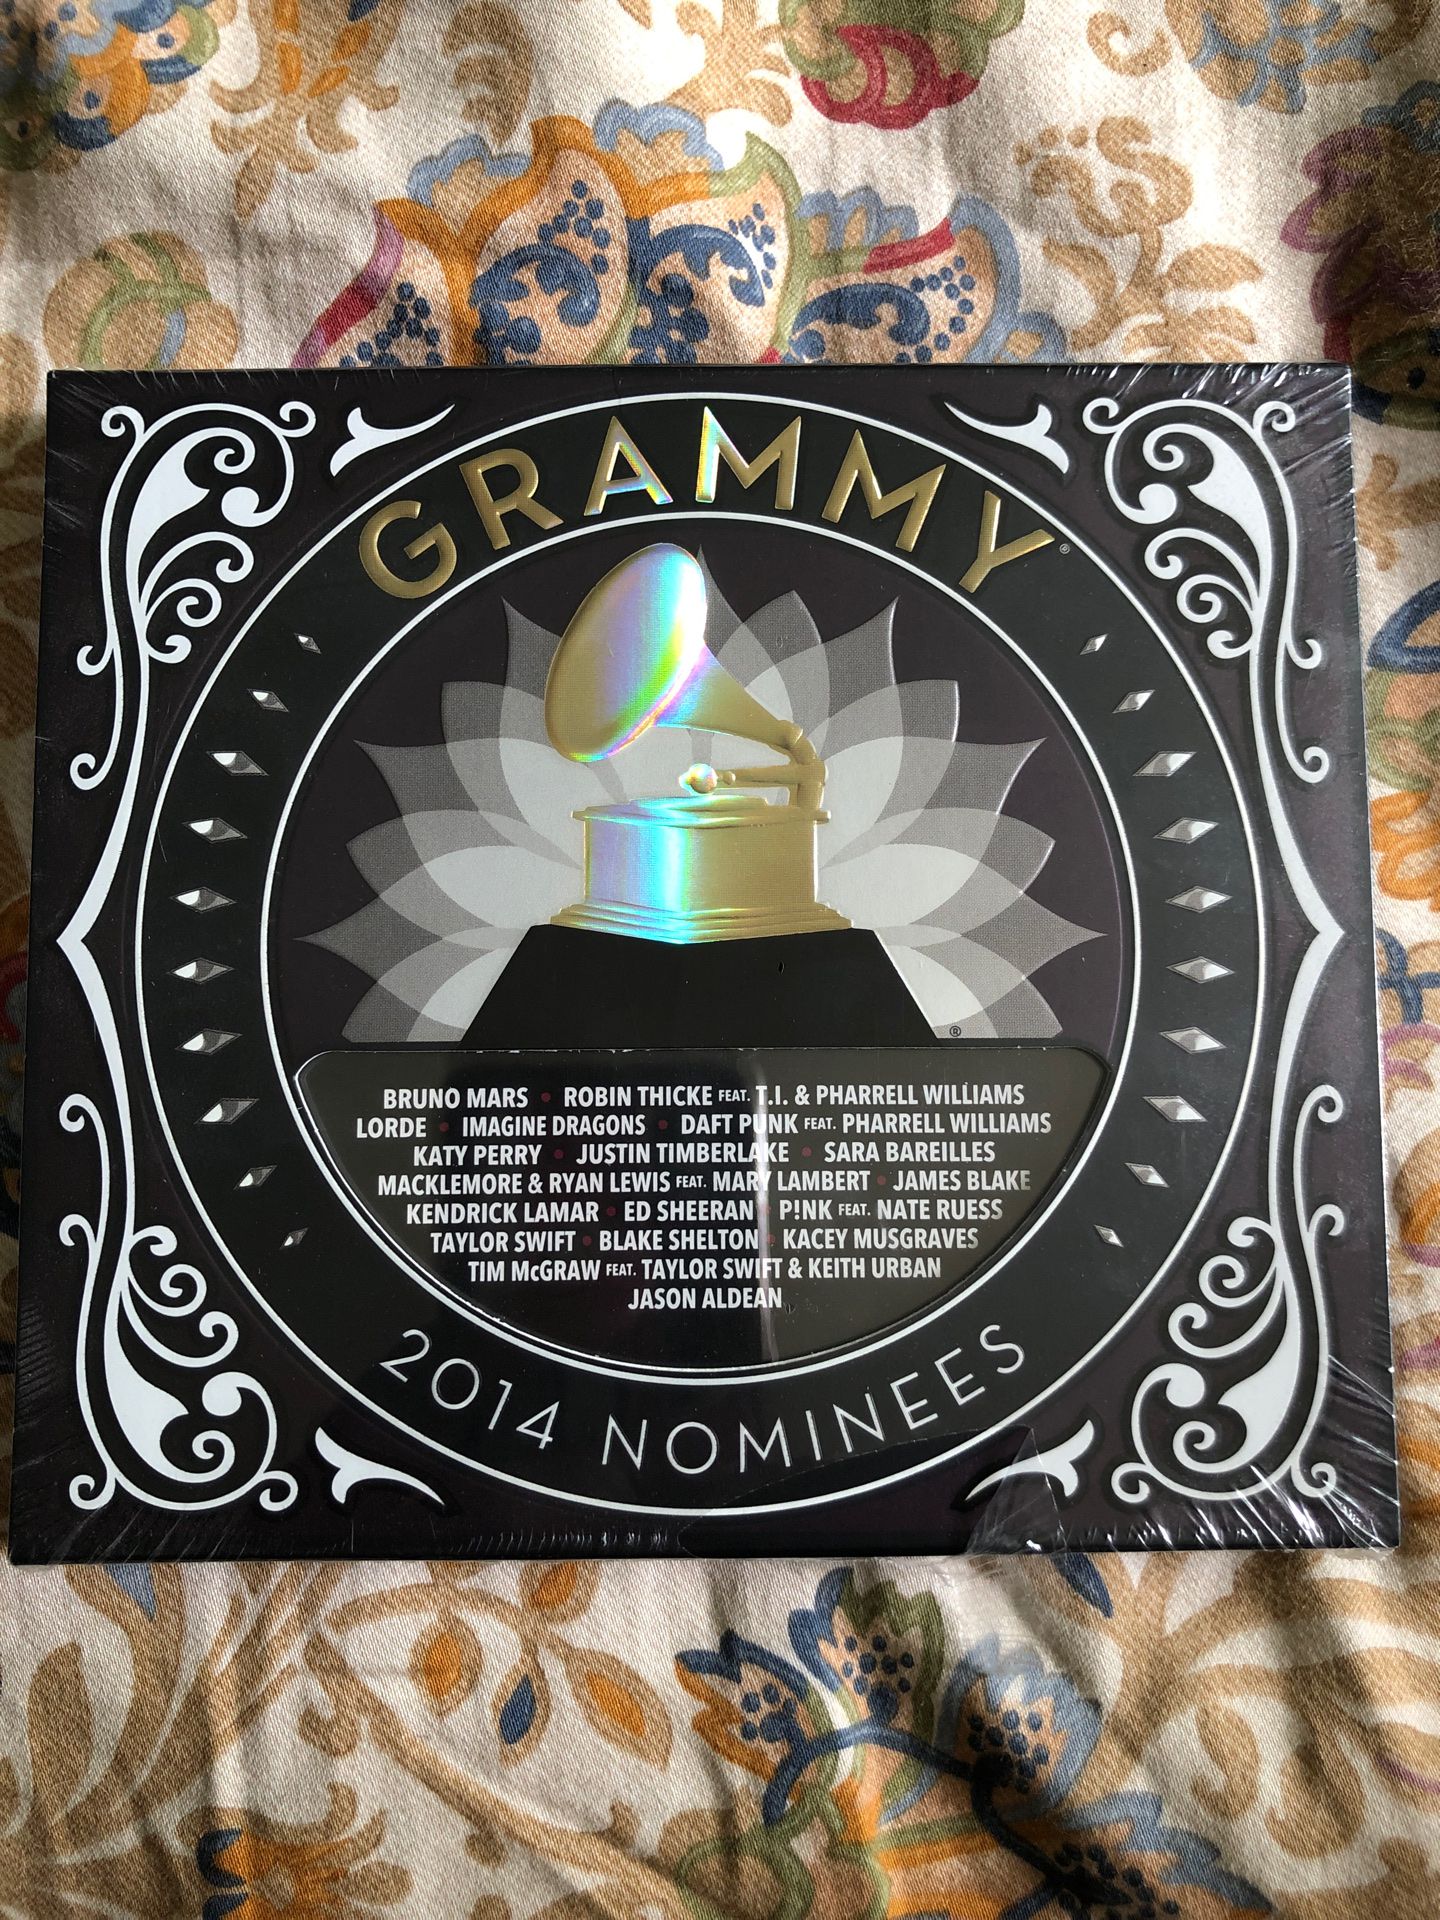 2014 Grammy Nominees CD